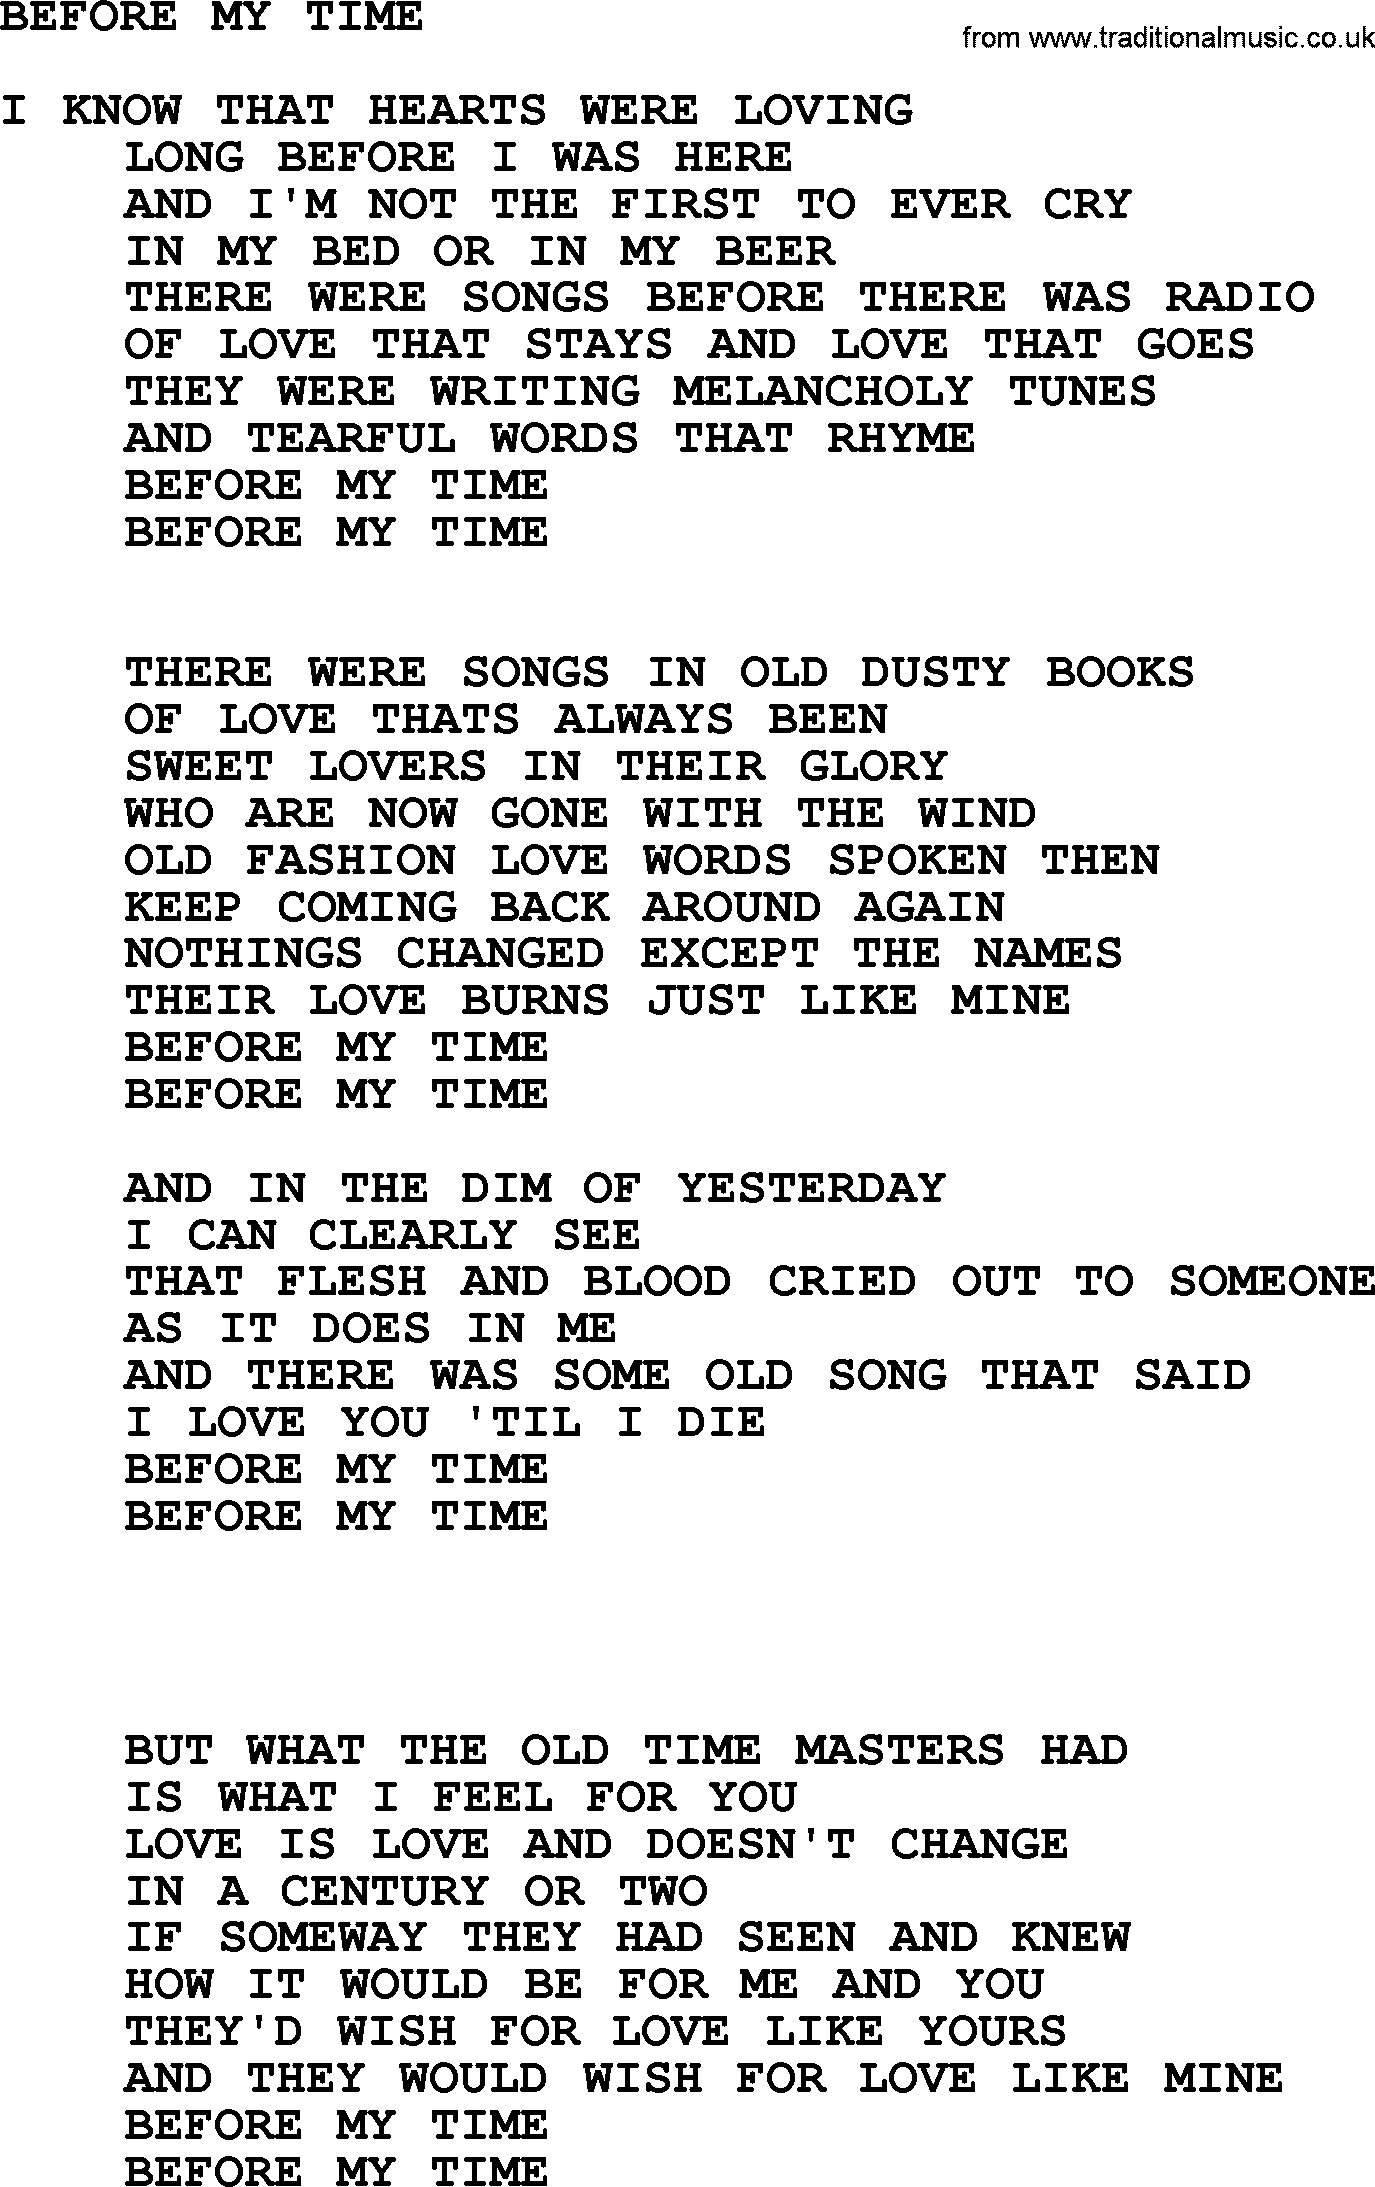 Johnny Cash song Before My Time.txt lyrics